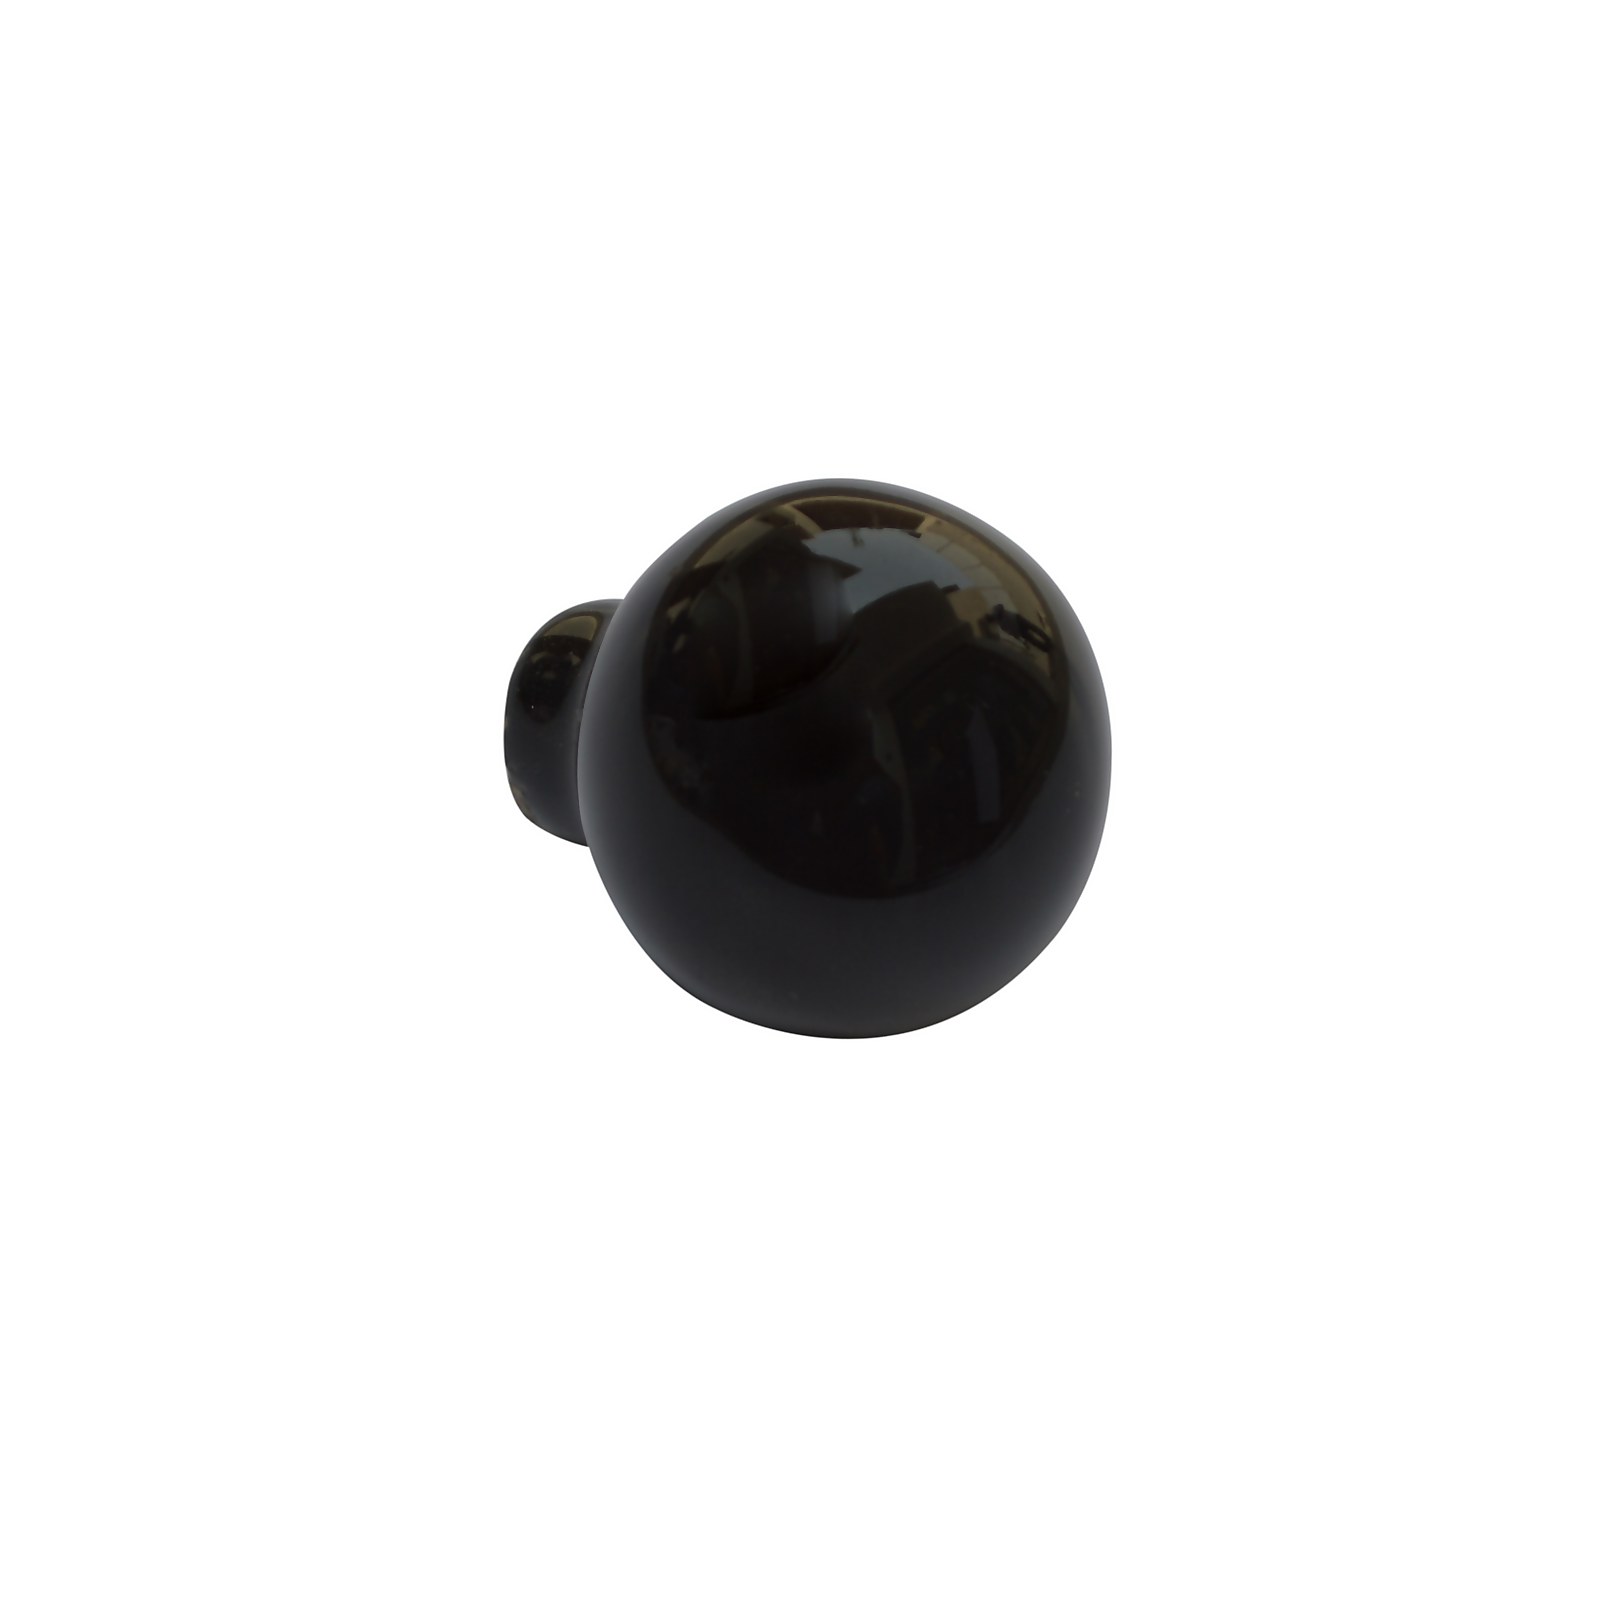 Photo of Arden 35mm Ceramic Black Cabinet Knob - 6 Pack